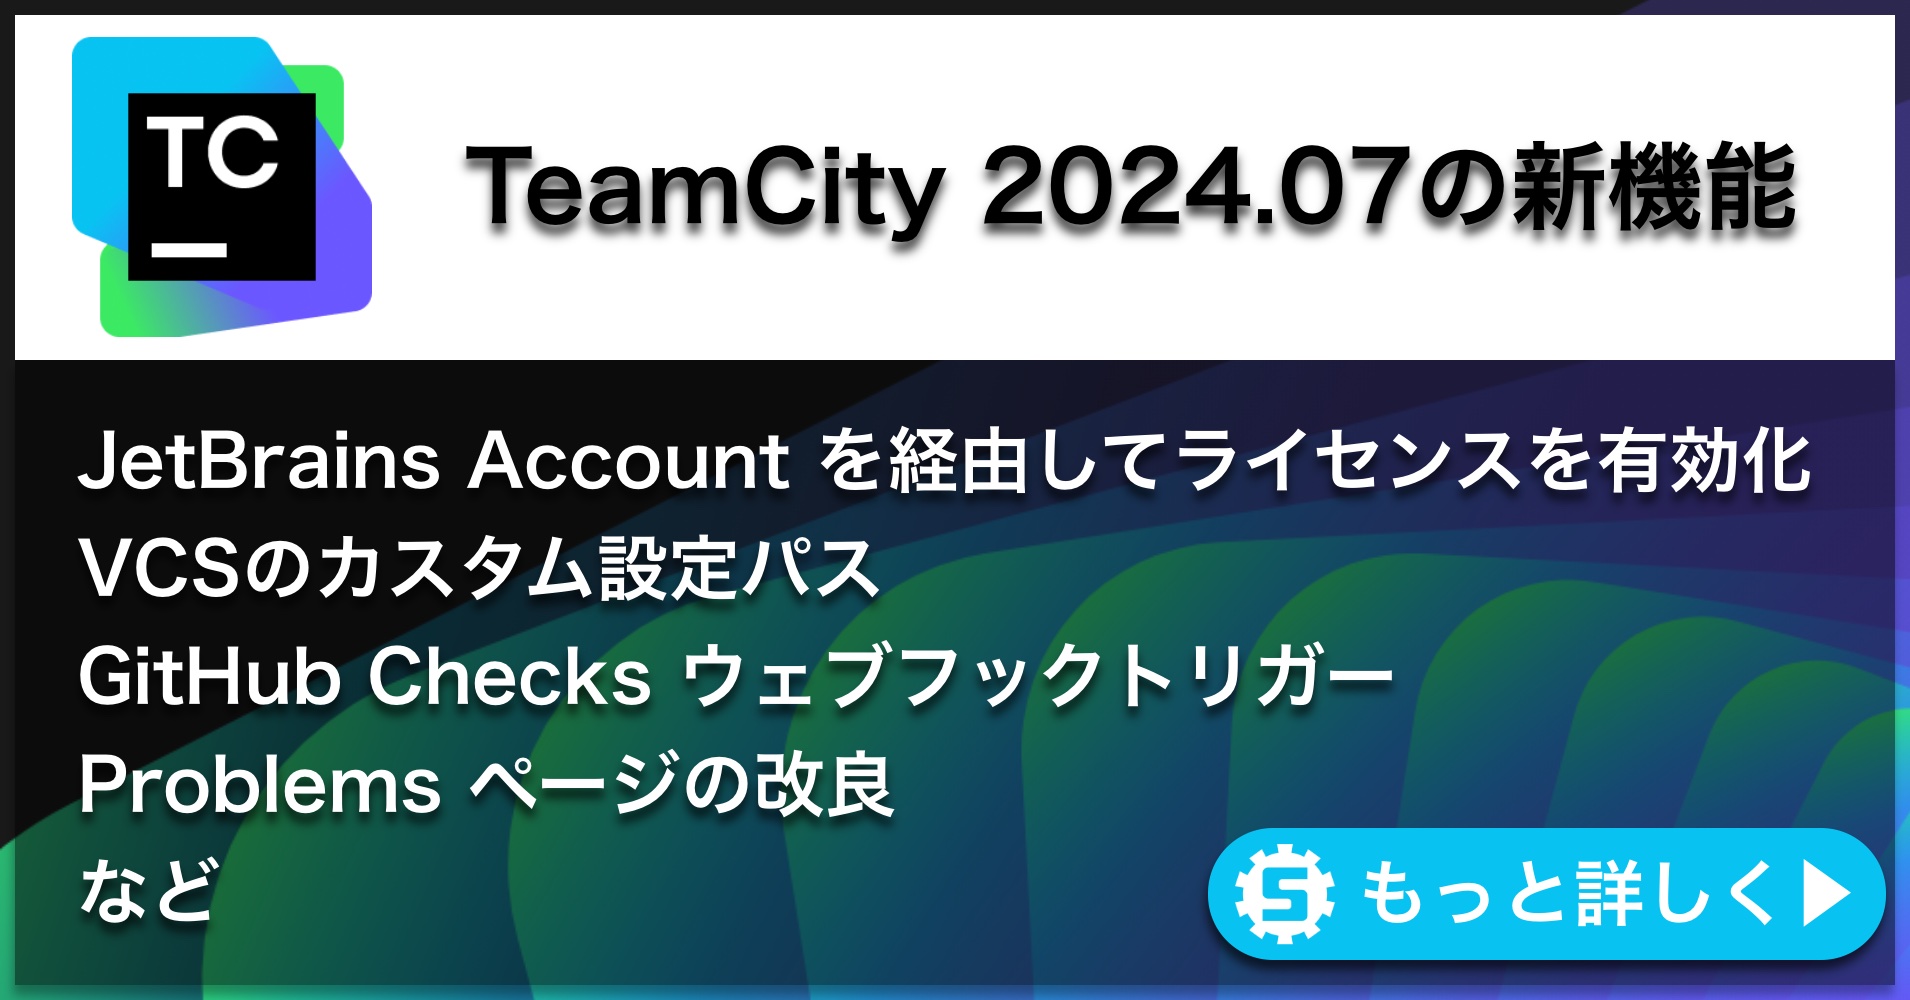 TeamCity 2024.07の新機能